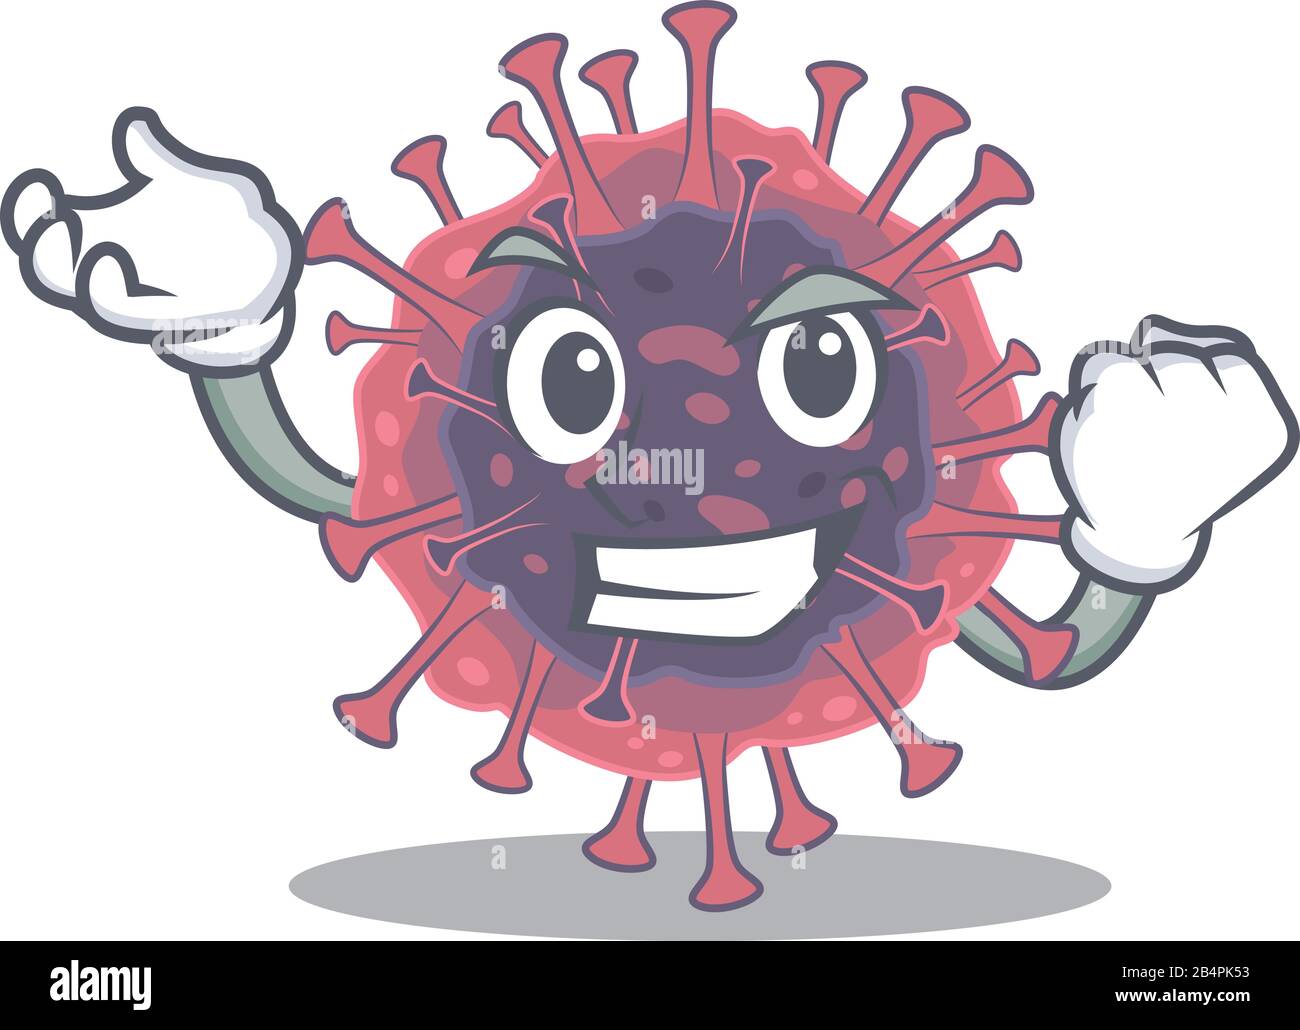 microbiology coronavirus cartoon character style with happy face Stock Vector